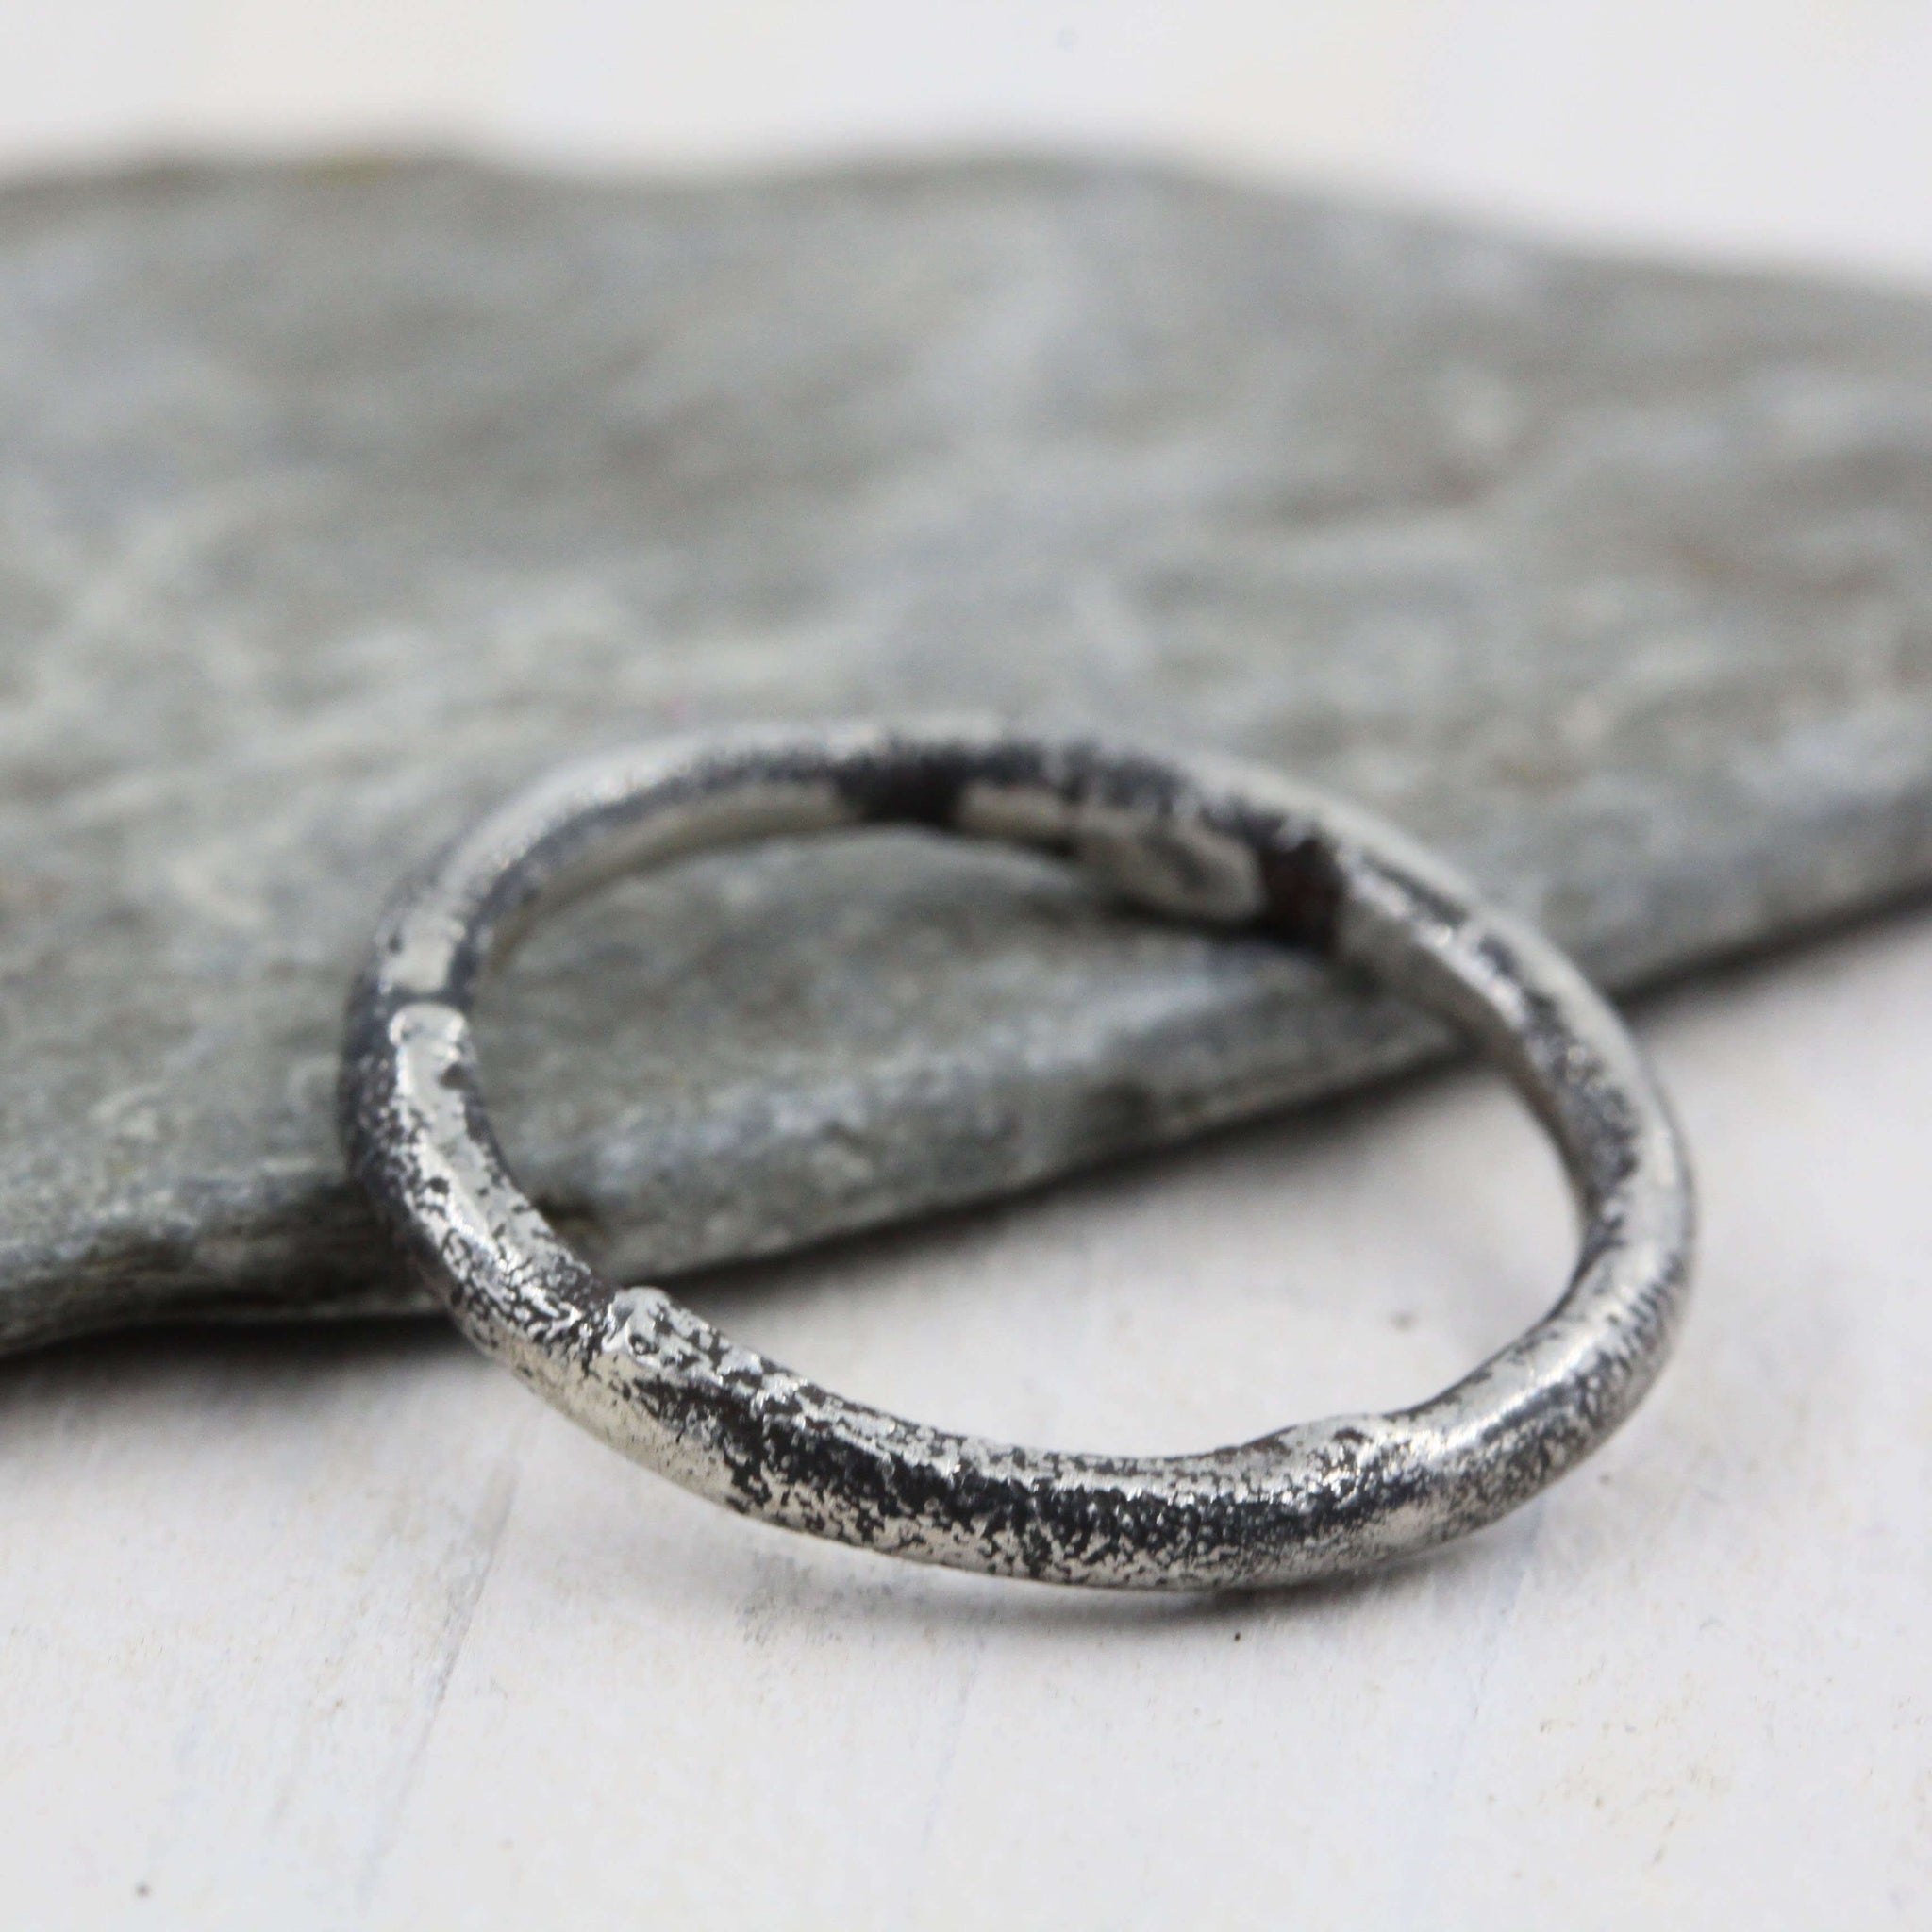 Handmade sea inspired, sterling silver ring